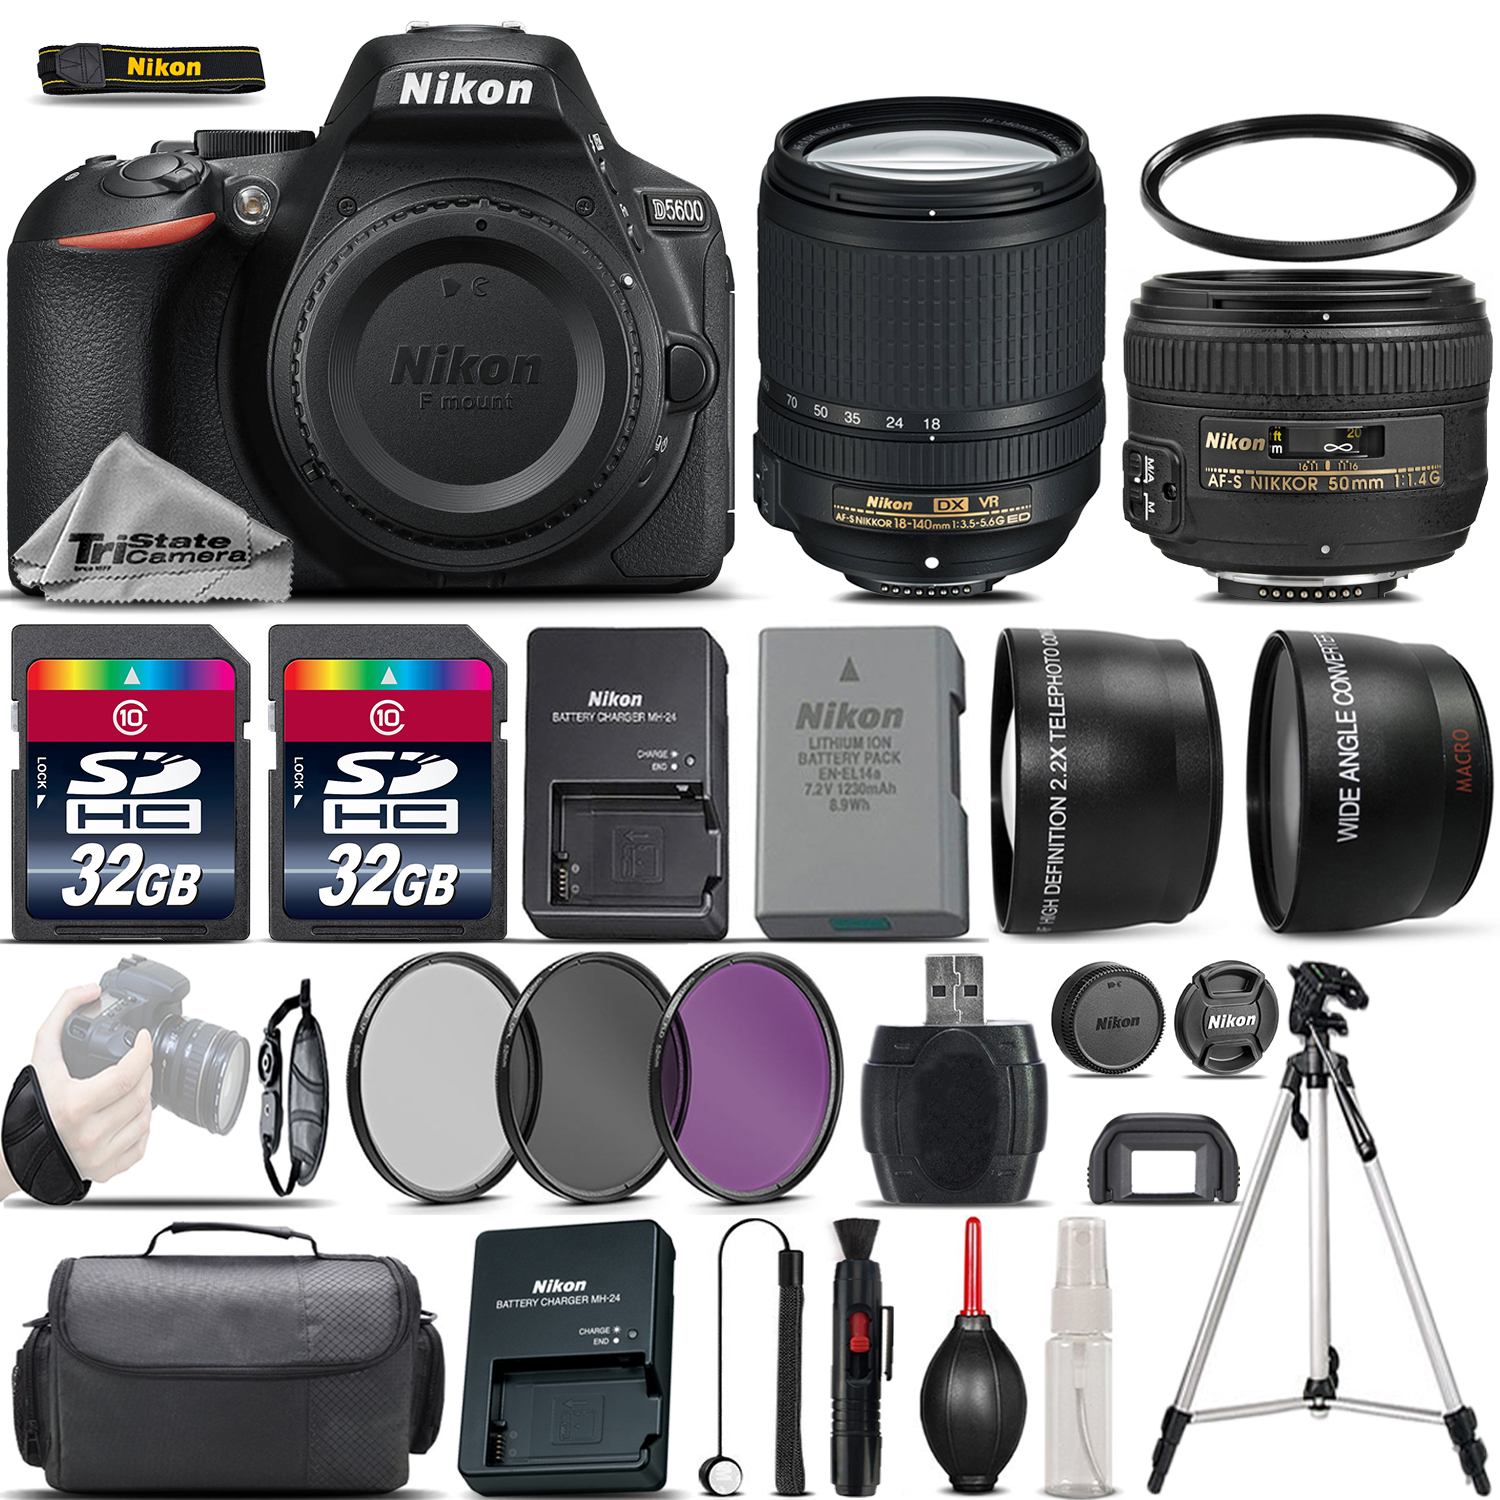 D5600 Digital SLR Camera + 18-140mm VR + 50mm 1.4G Lens + 64GB -4 Lens Kit *FREE SHIPPING*